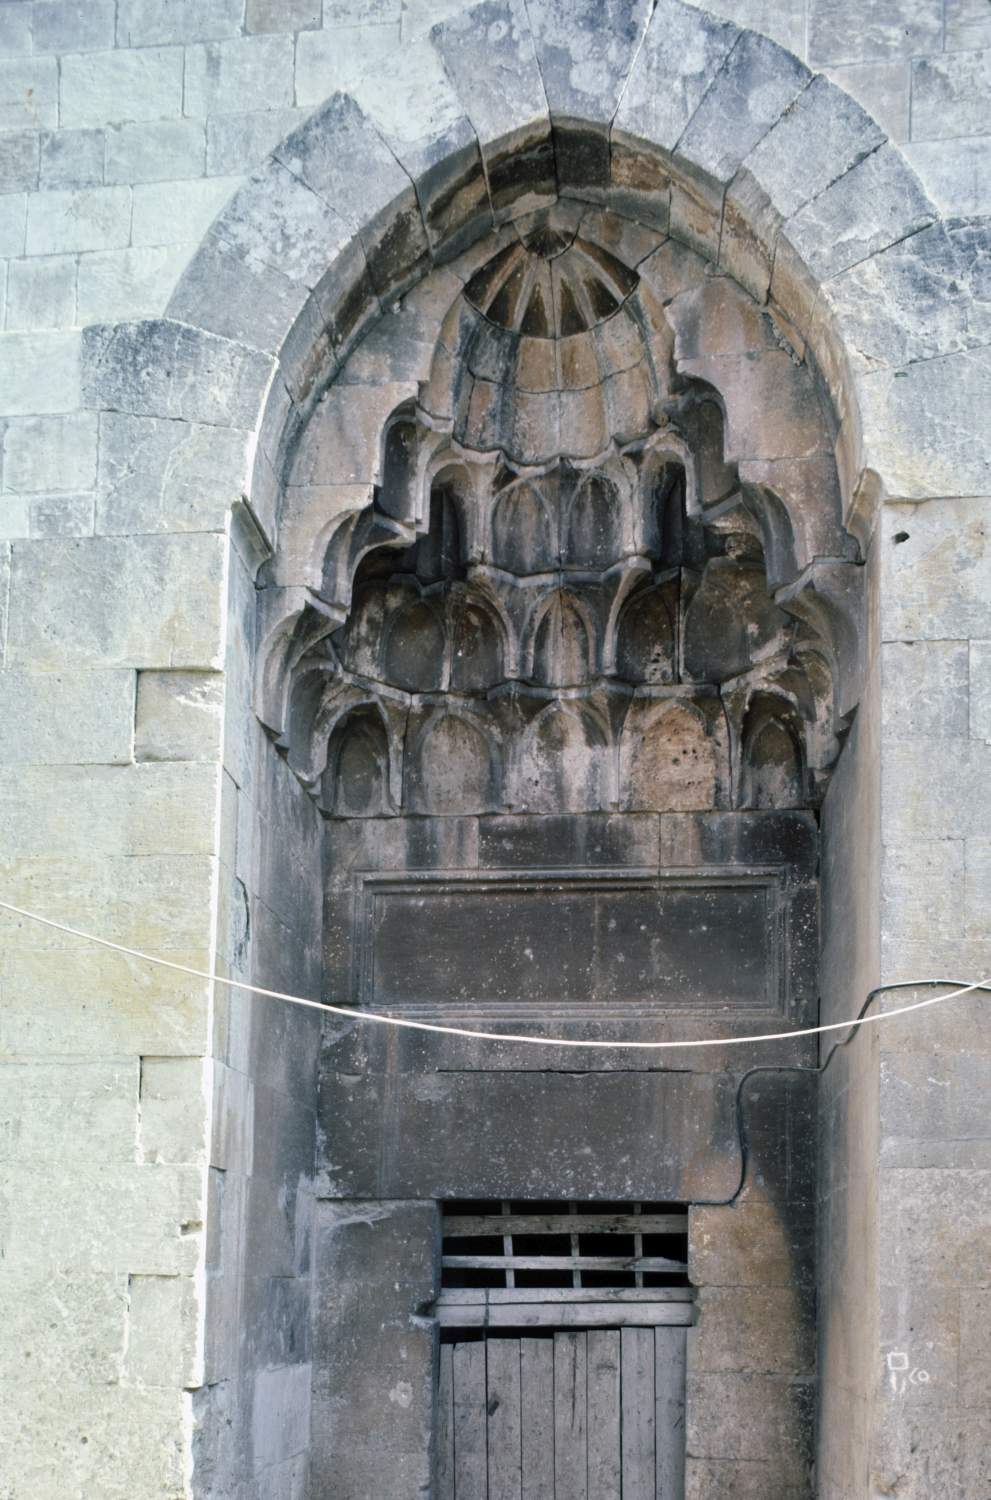 Entrance portal, view of upper part.